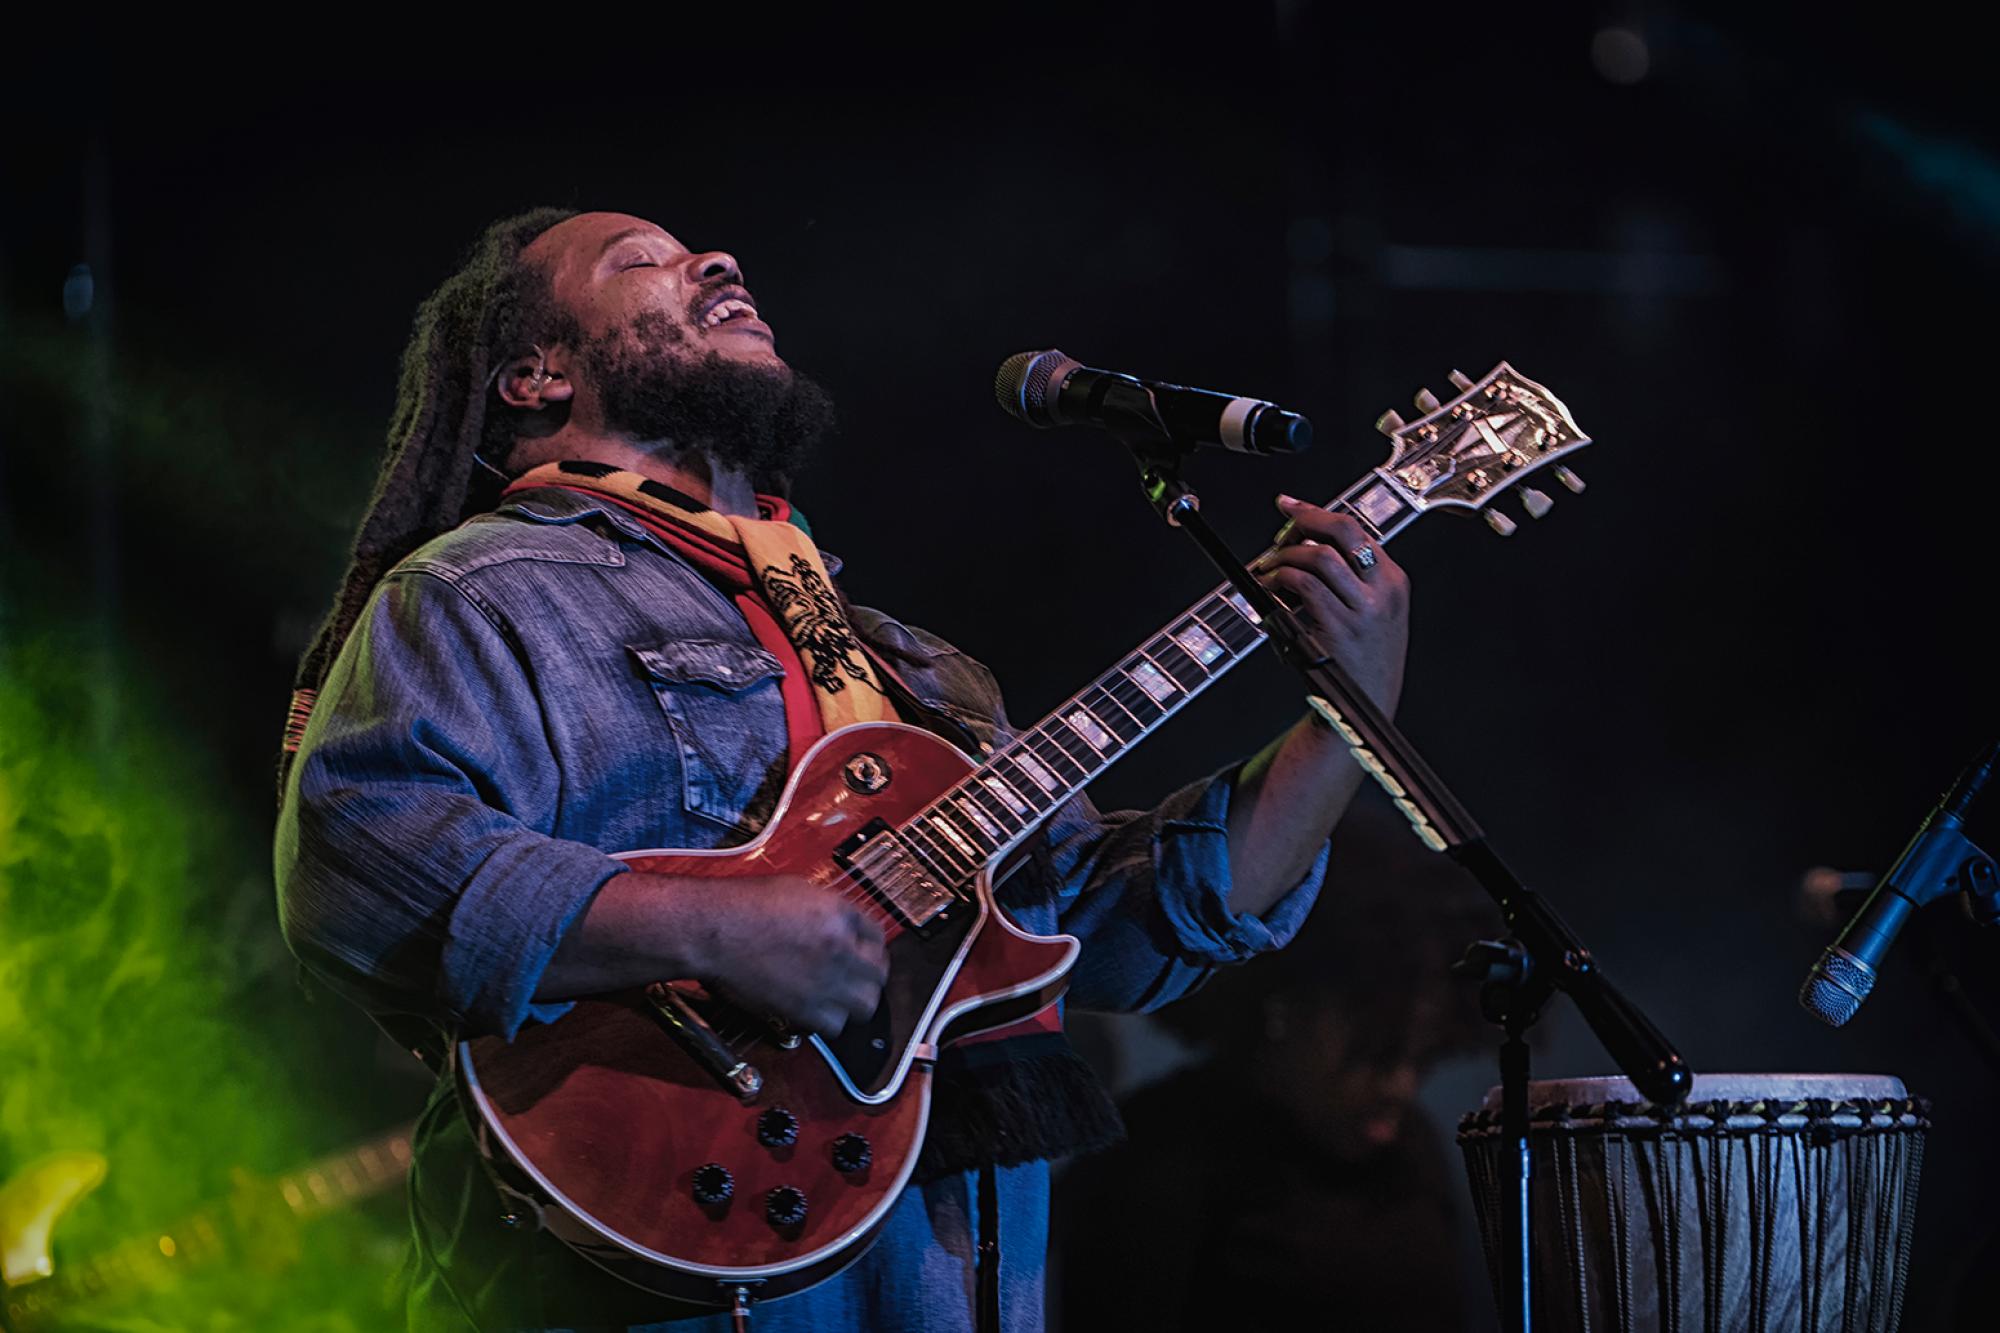 guitarist singer and performer at riverfest in wichita kansas 2018